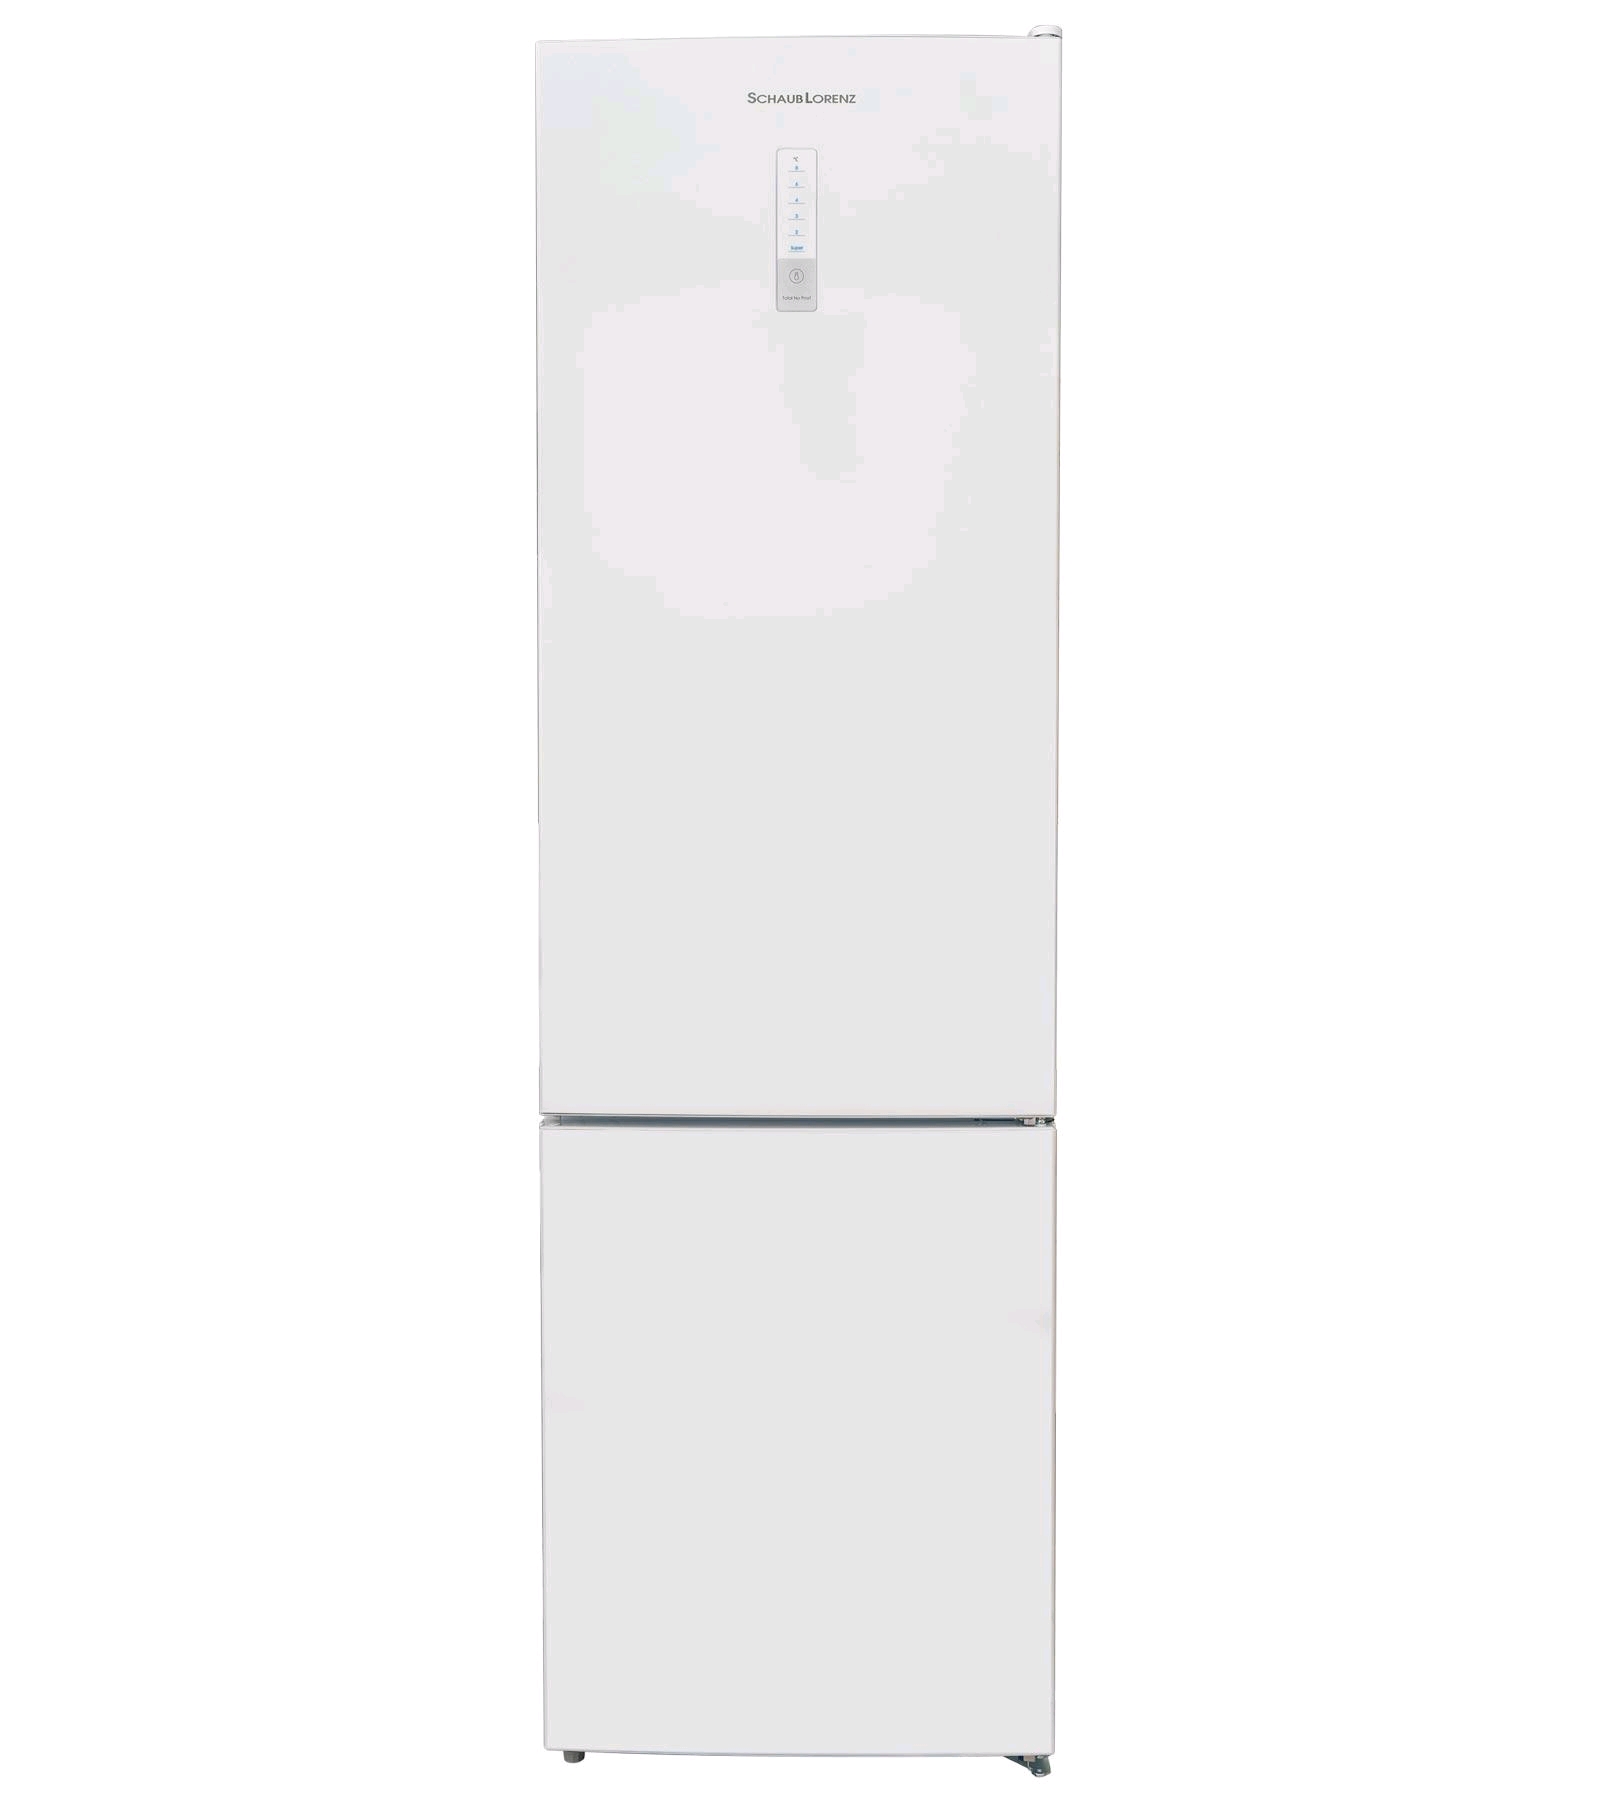 Schaub Lorenz SLU C201D0 W холодильник